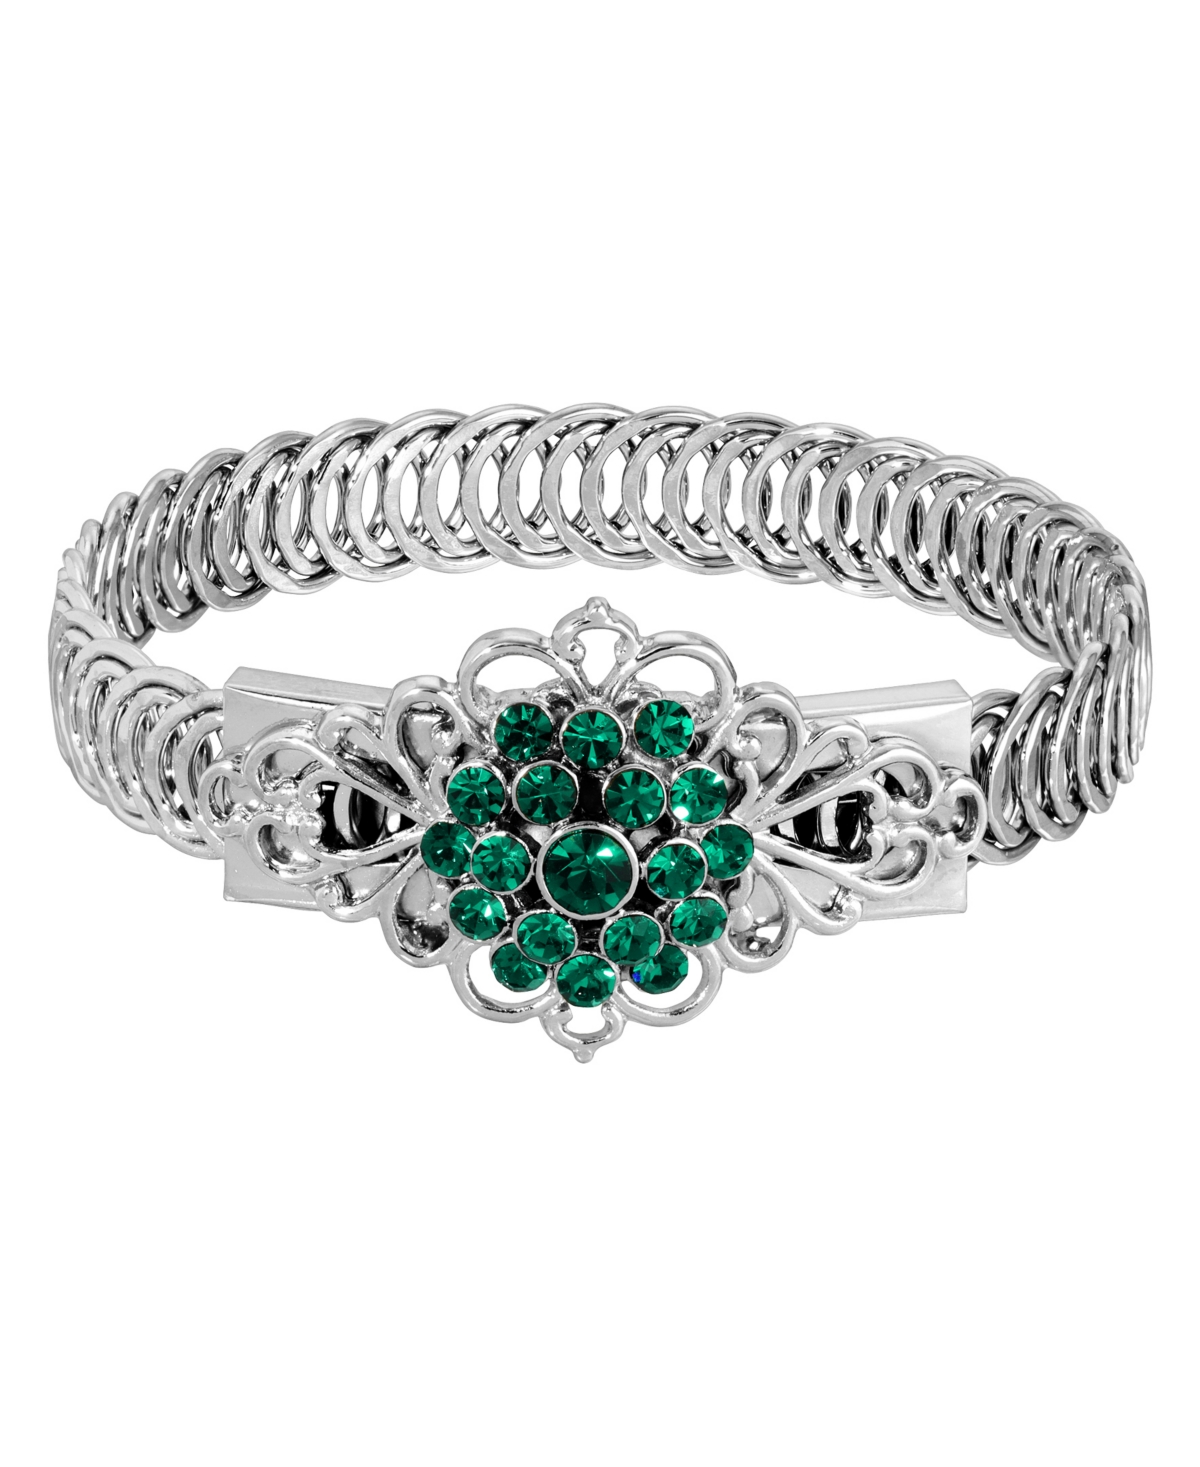 Silver-Tone Emerald Green Flower Overlay Belt Bracelet - Green